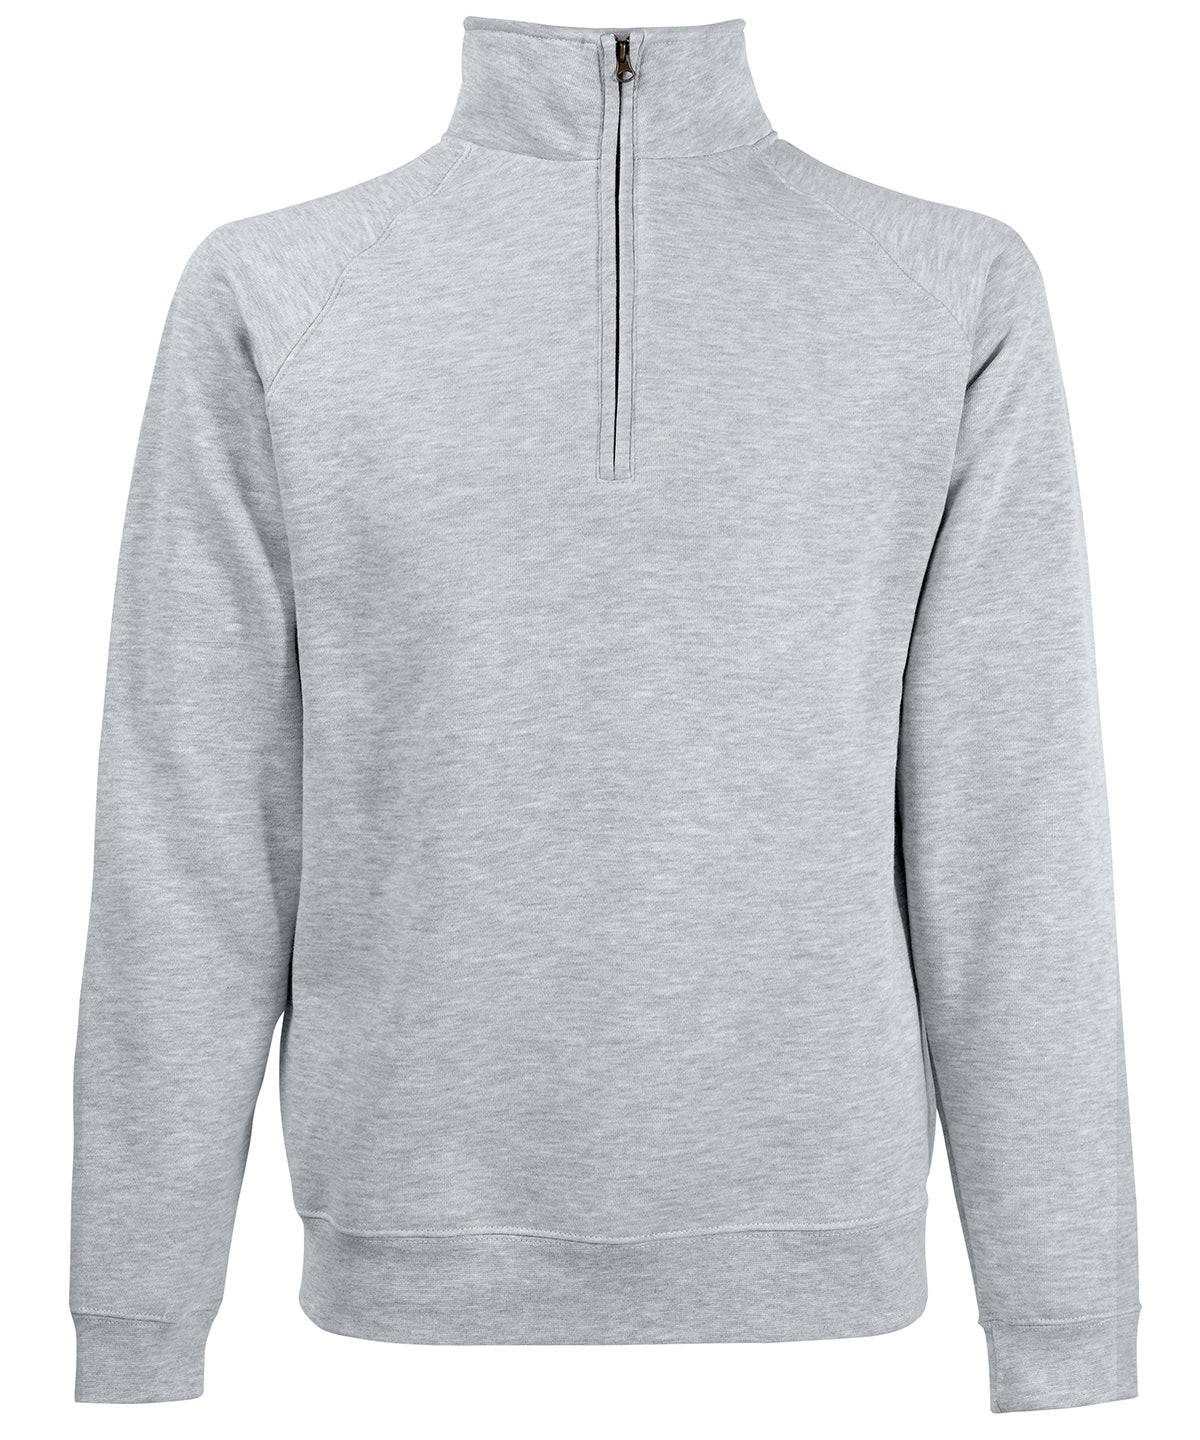 Personalised Sweatshirts - Black Fruit of the Loom Premium 70/30 zip-neck sweatshirt